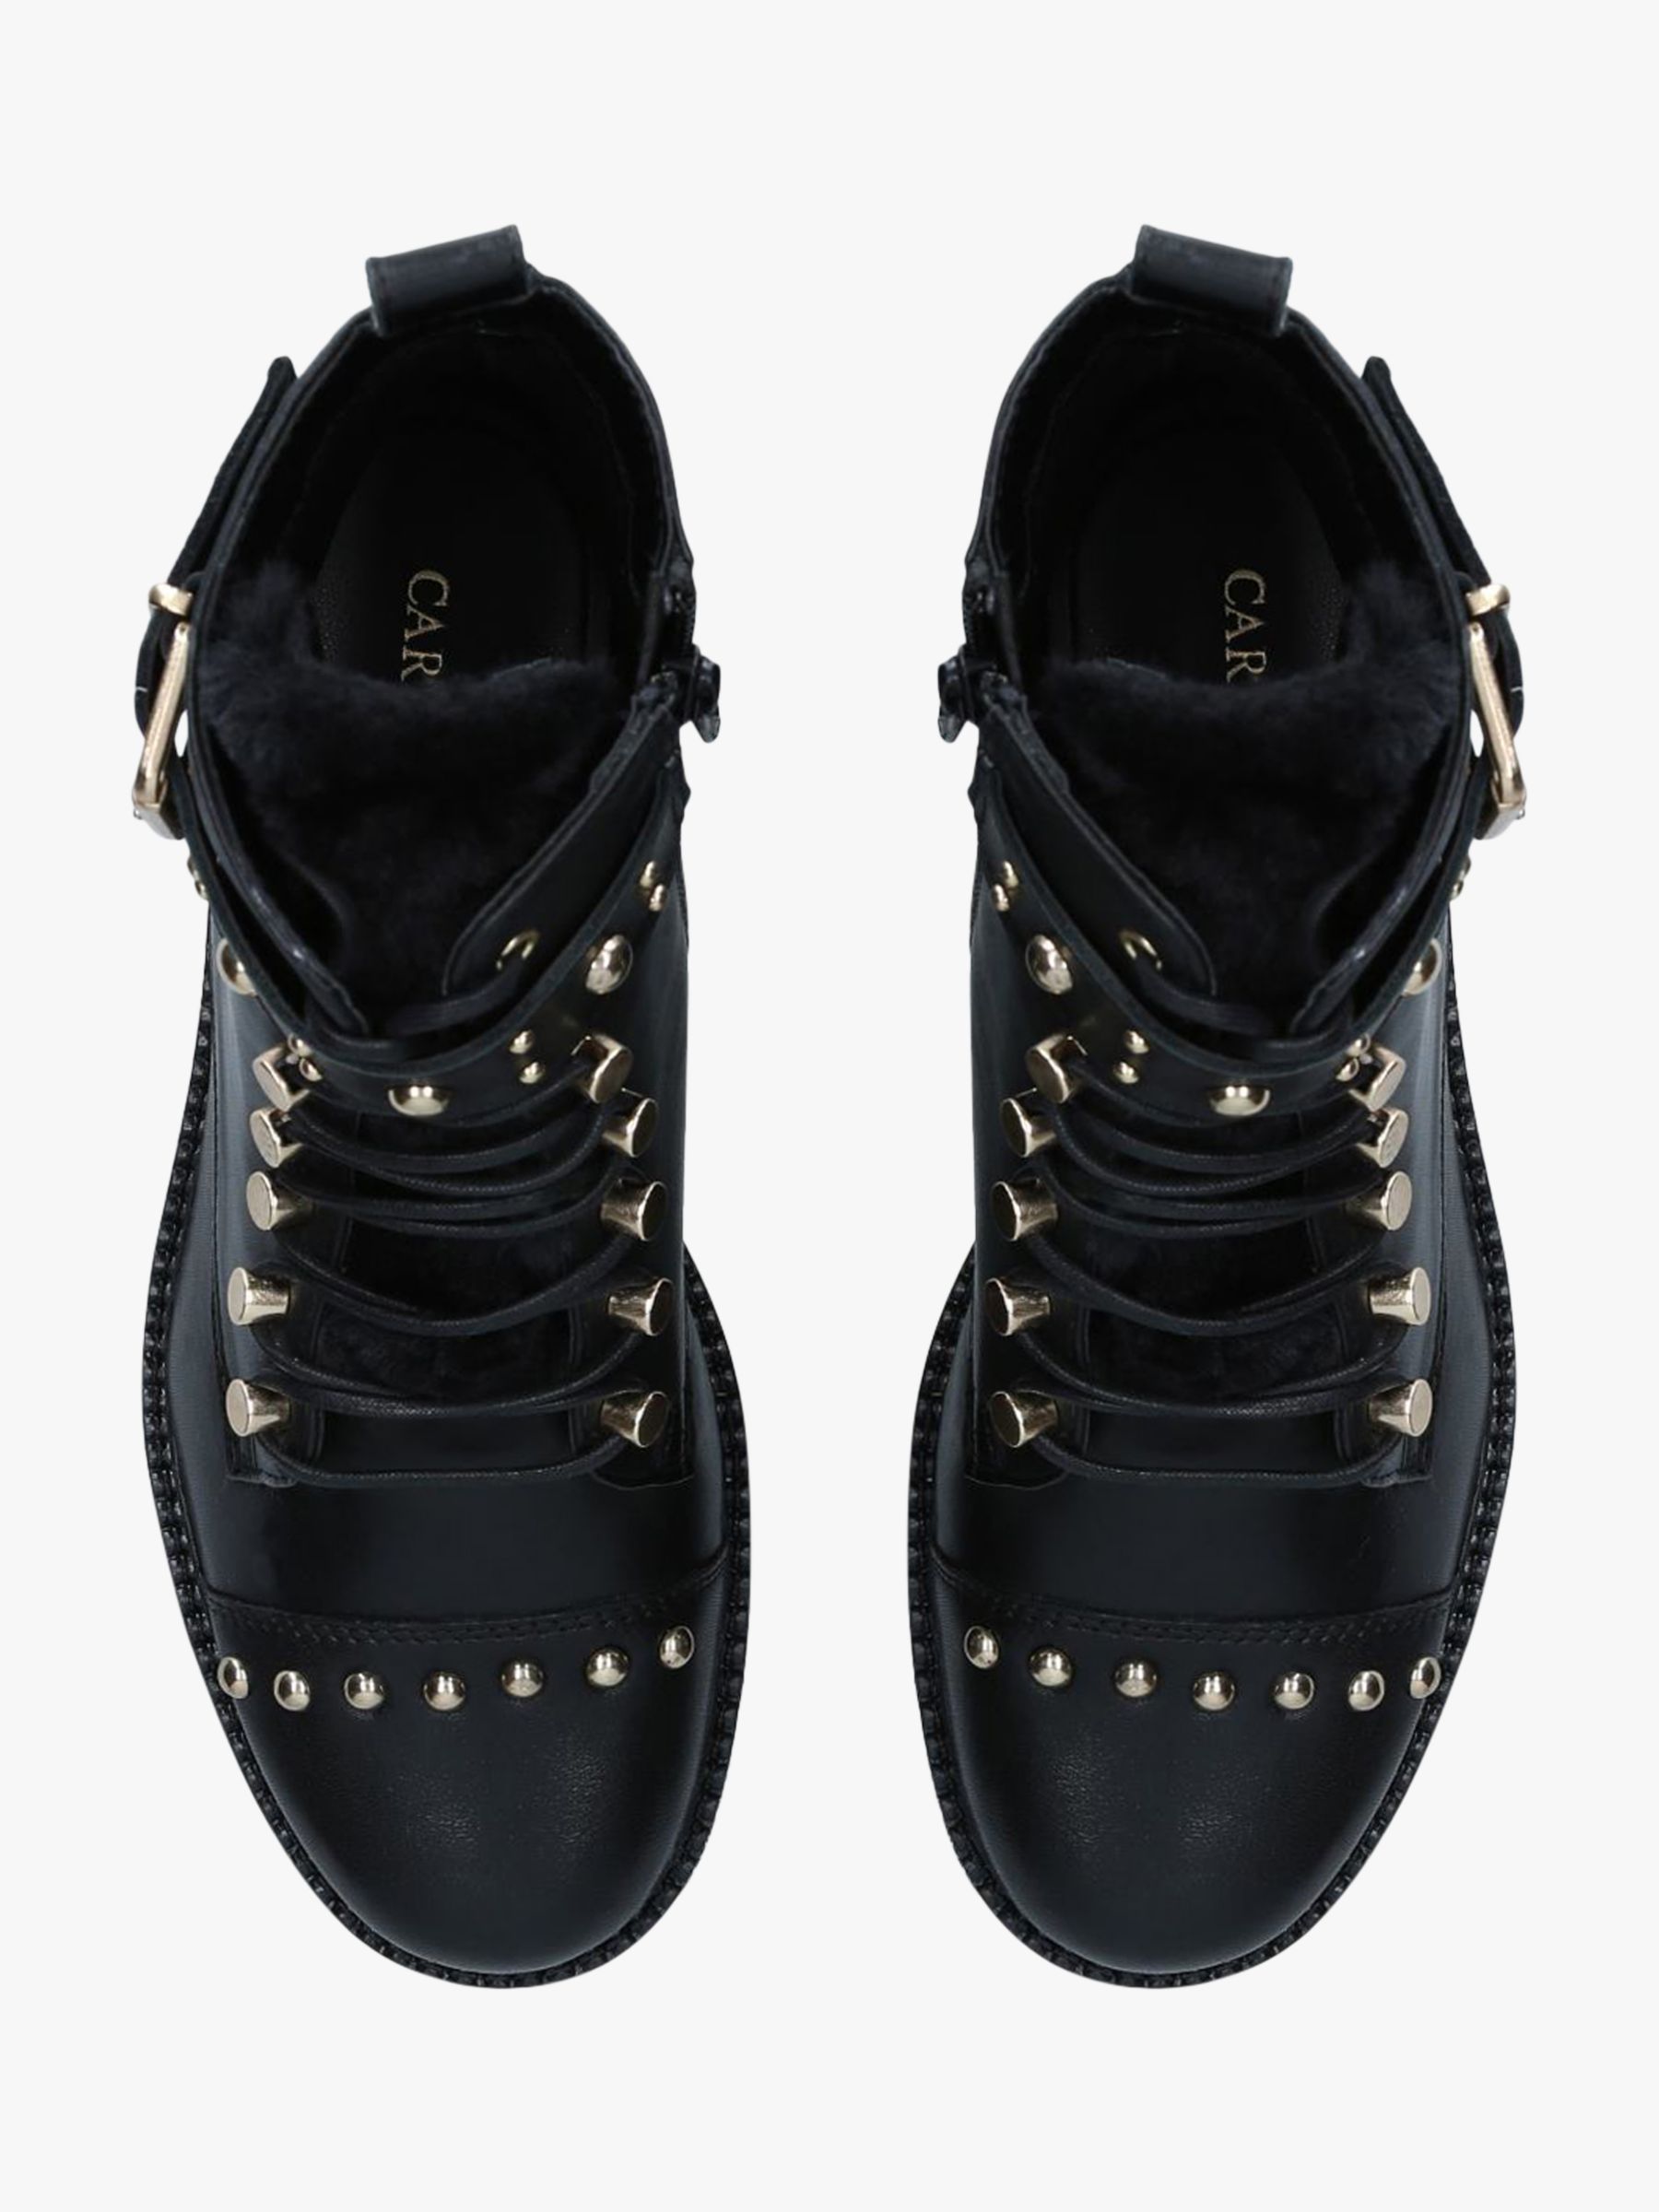 Carvela Sonny Lace Up Leather Ankle Boots, Black, 3